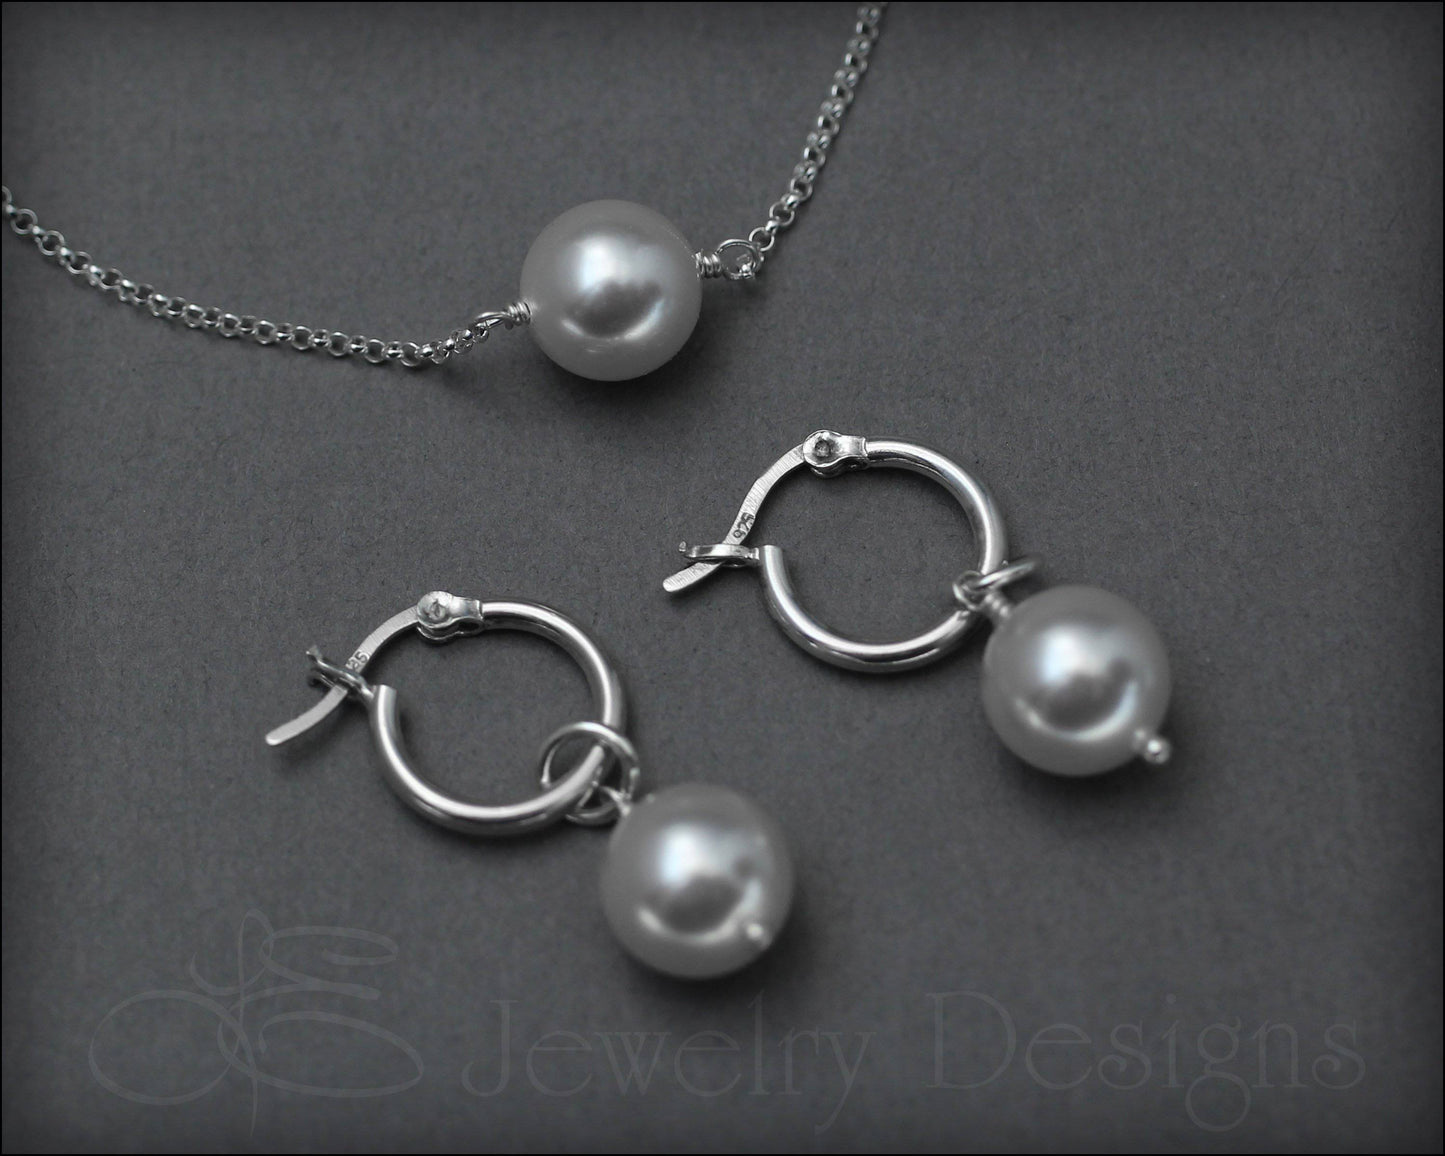 Interchangeable Pearl Earrings - (choose color) - LE Jewelry Designs